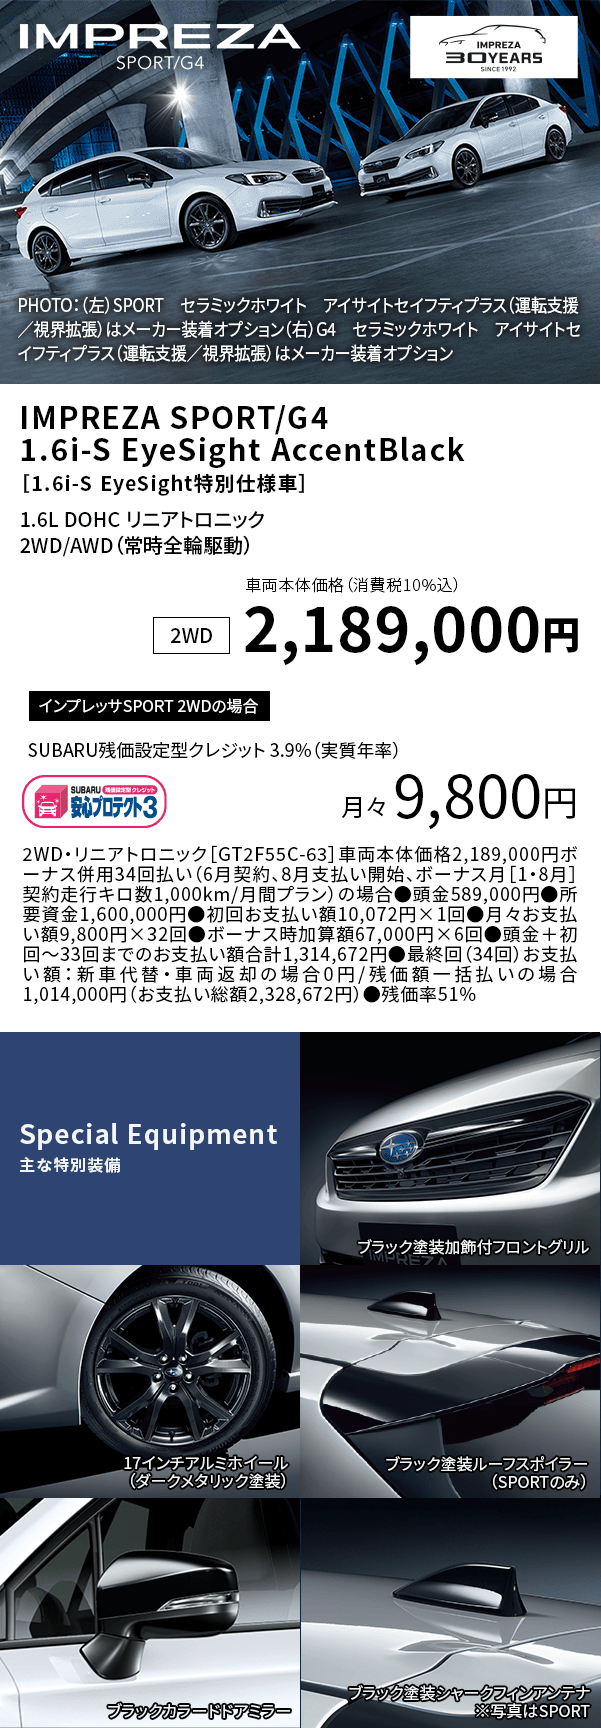 IMPREZA SPORT 1.6i-S EyeSight AccentBlack ［1.6i-S EyeSight特別仕様車］